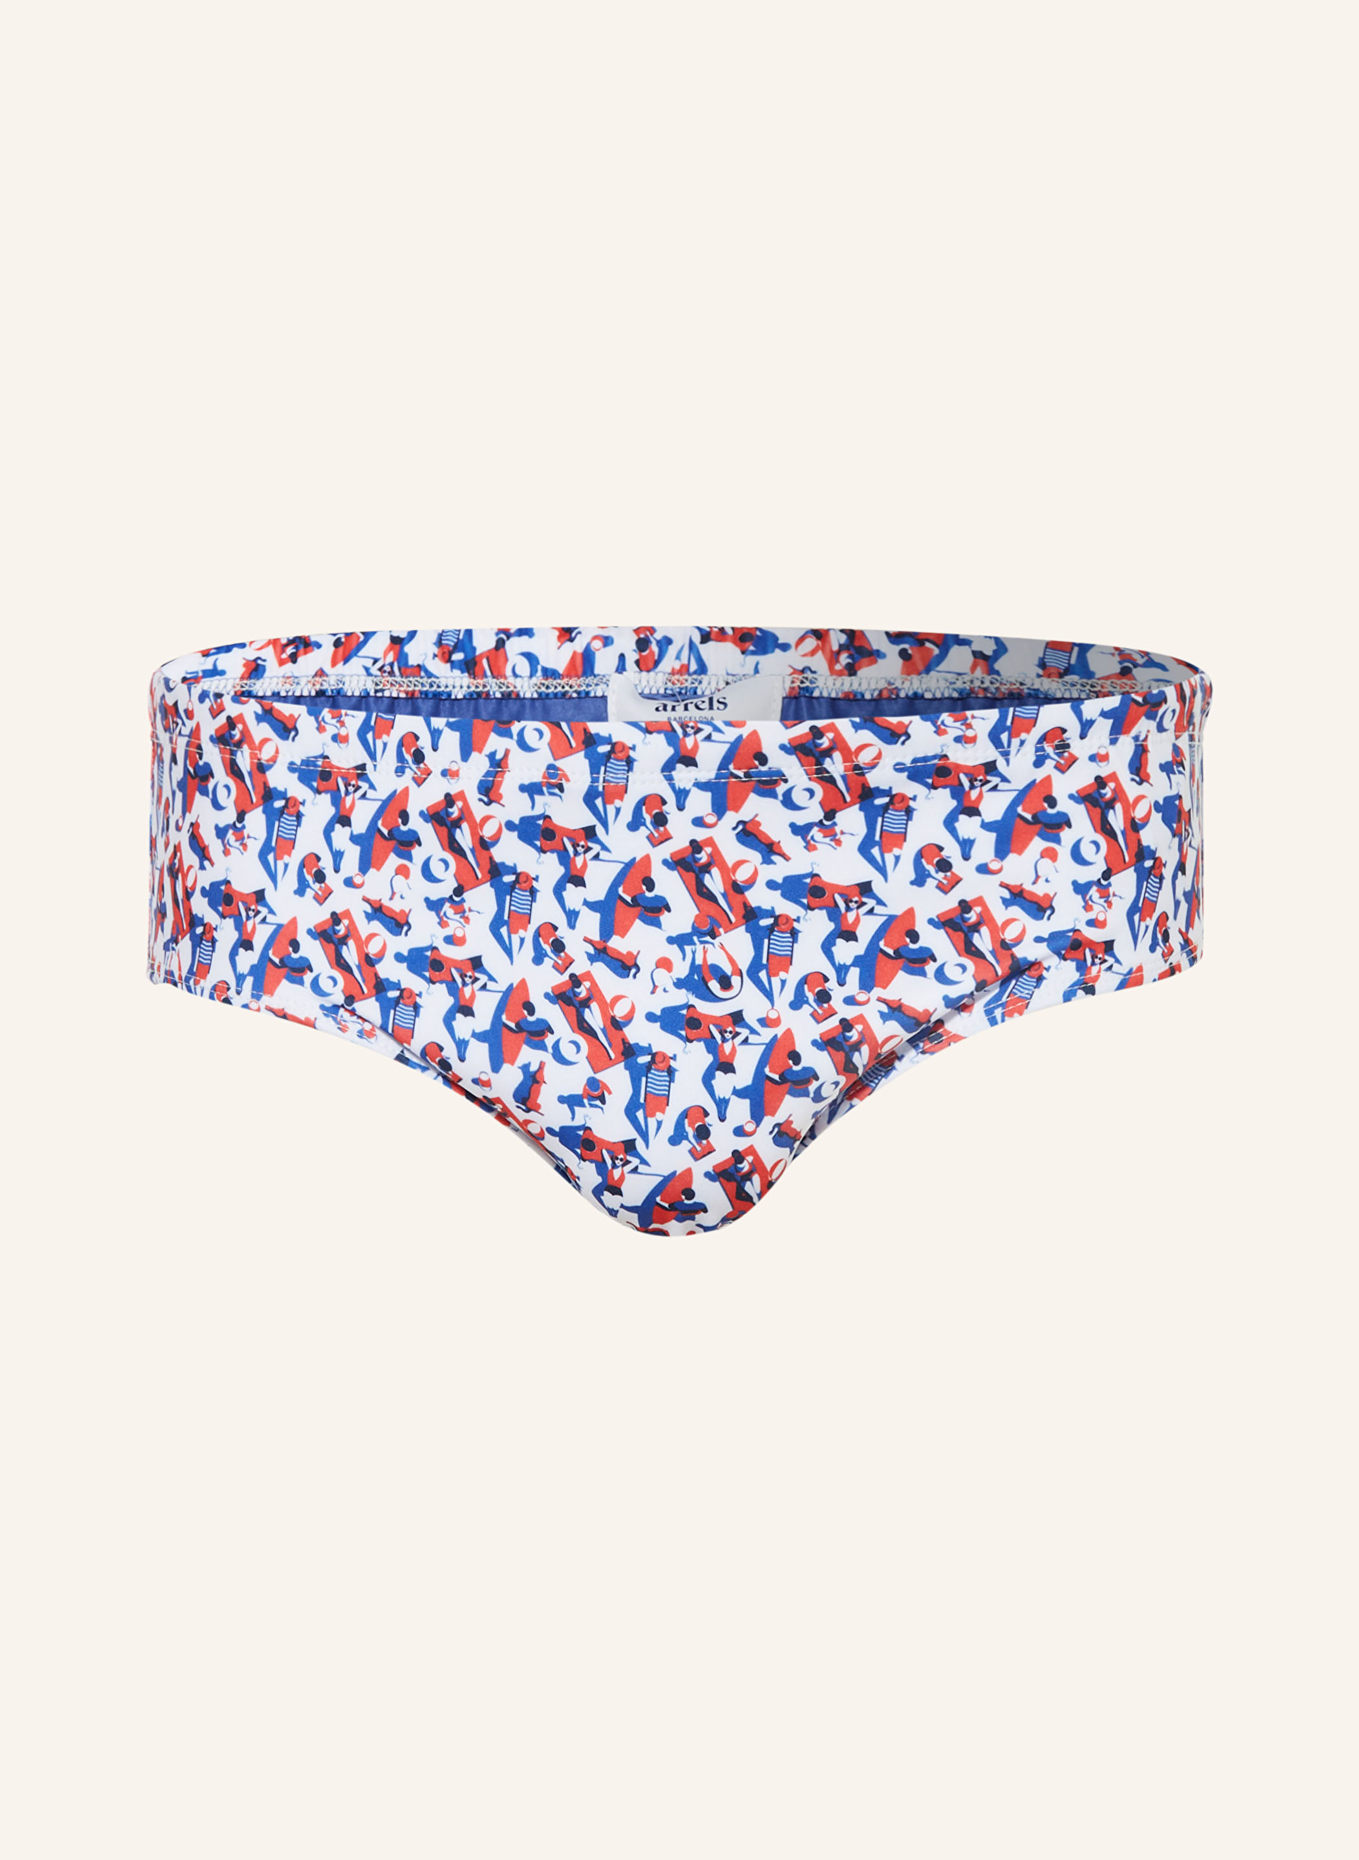 arrels BARCELONA Swim brief RED RUSH HOUR × MALIKA FAVRE, Color: WHITE/ BLUE/ RED (Image 1)